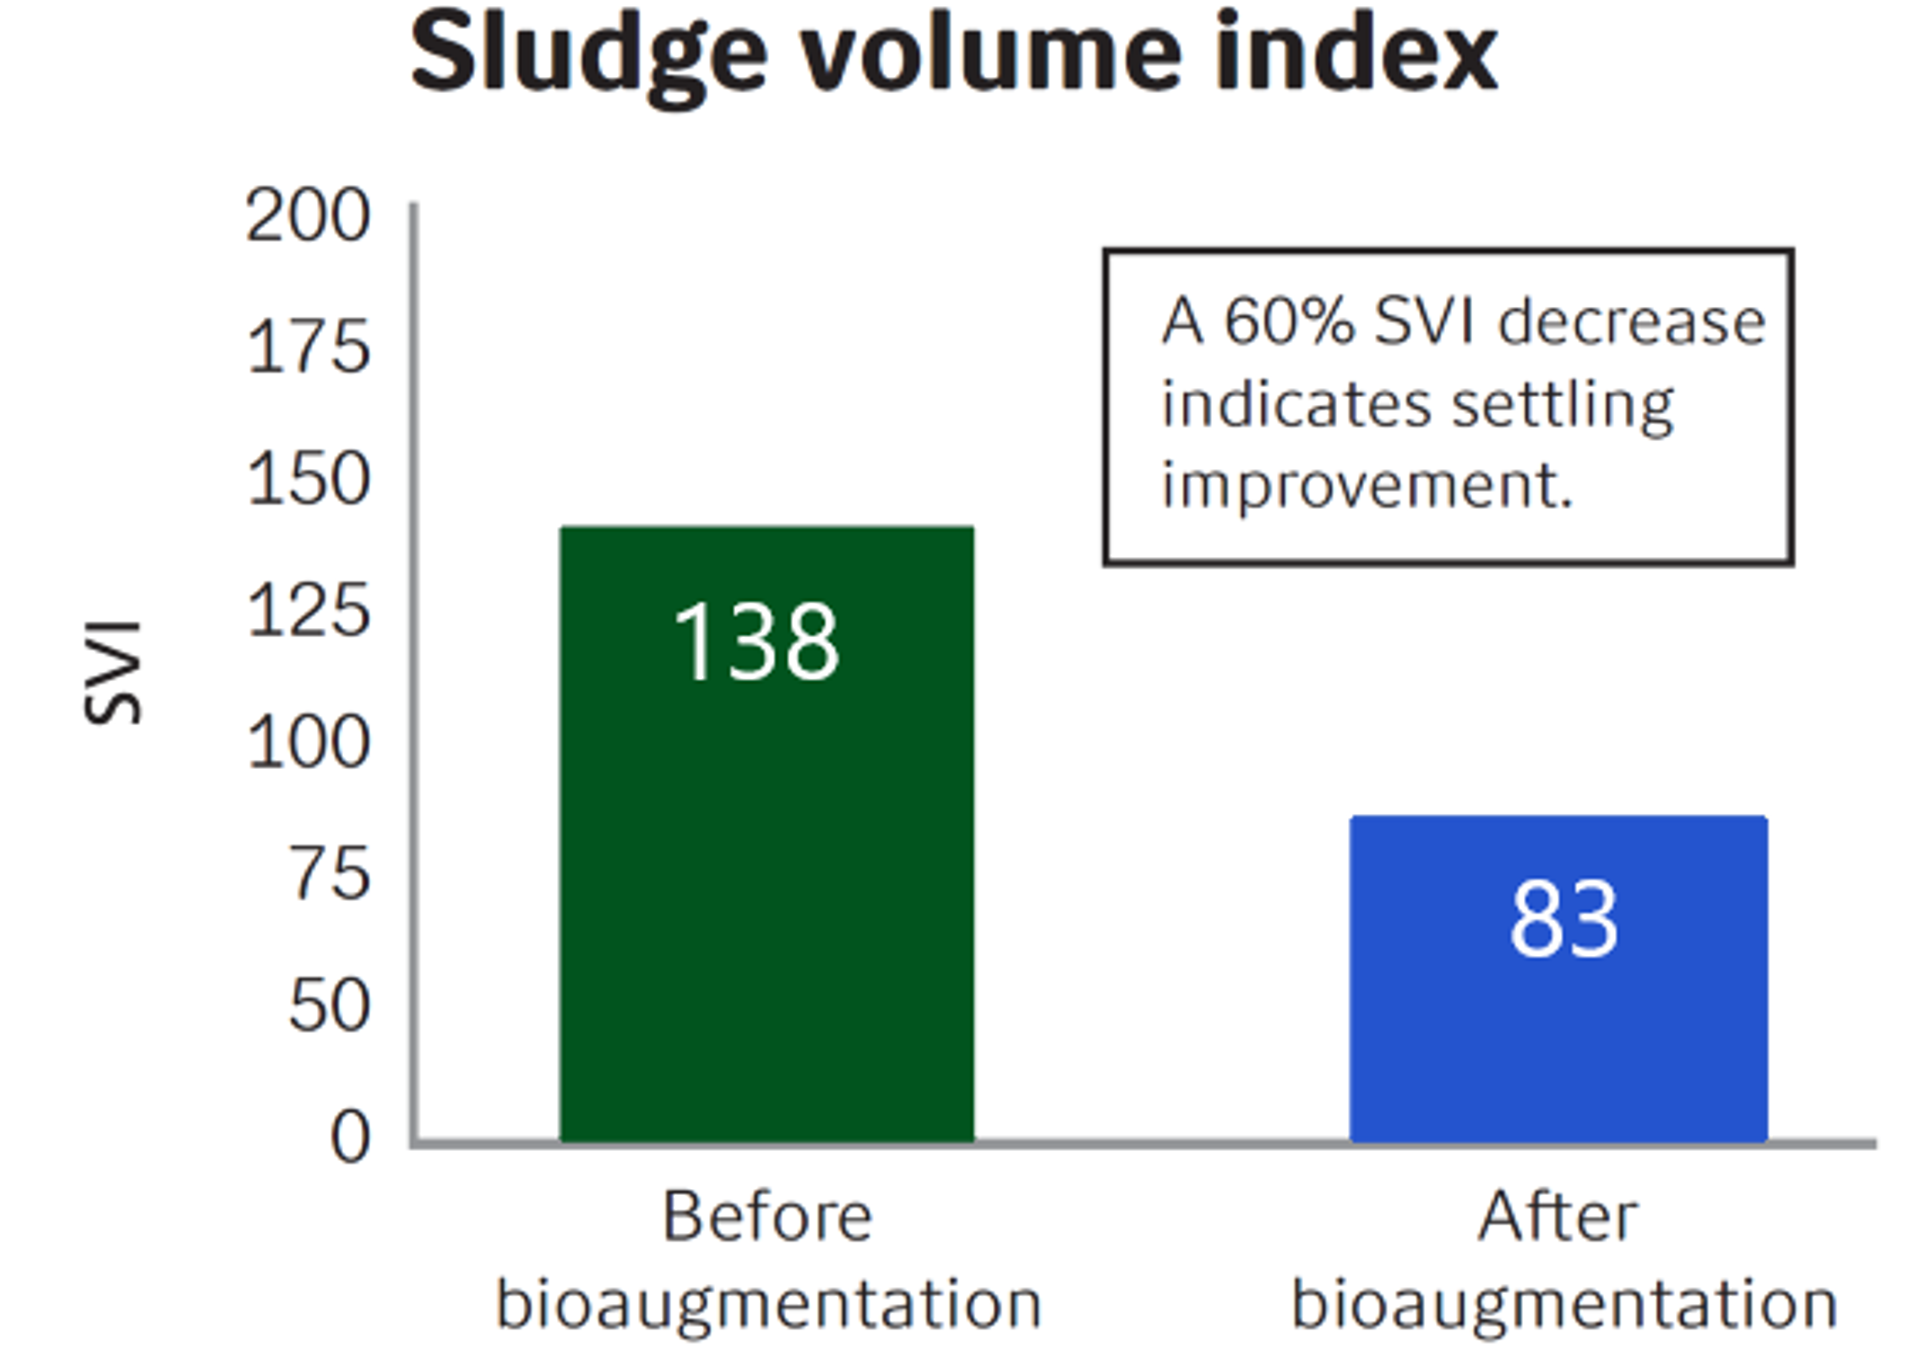 SVI decrease indicates settling improvement.